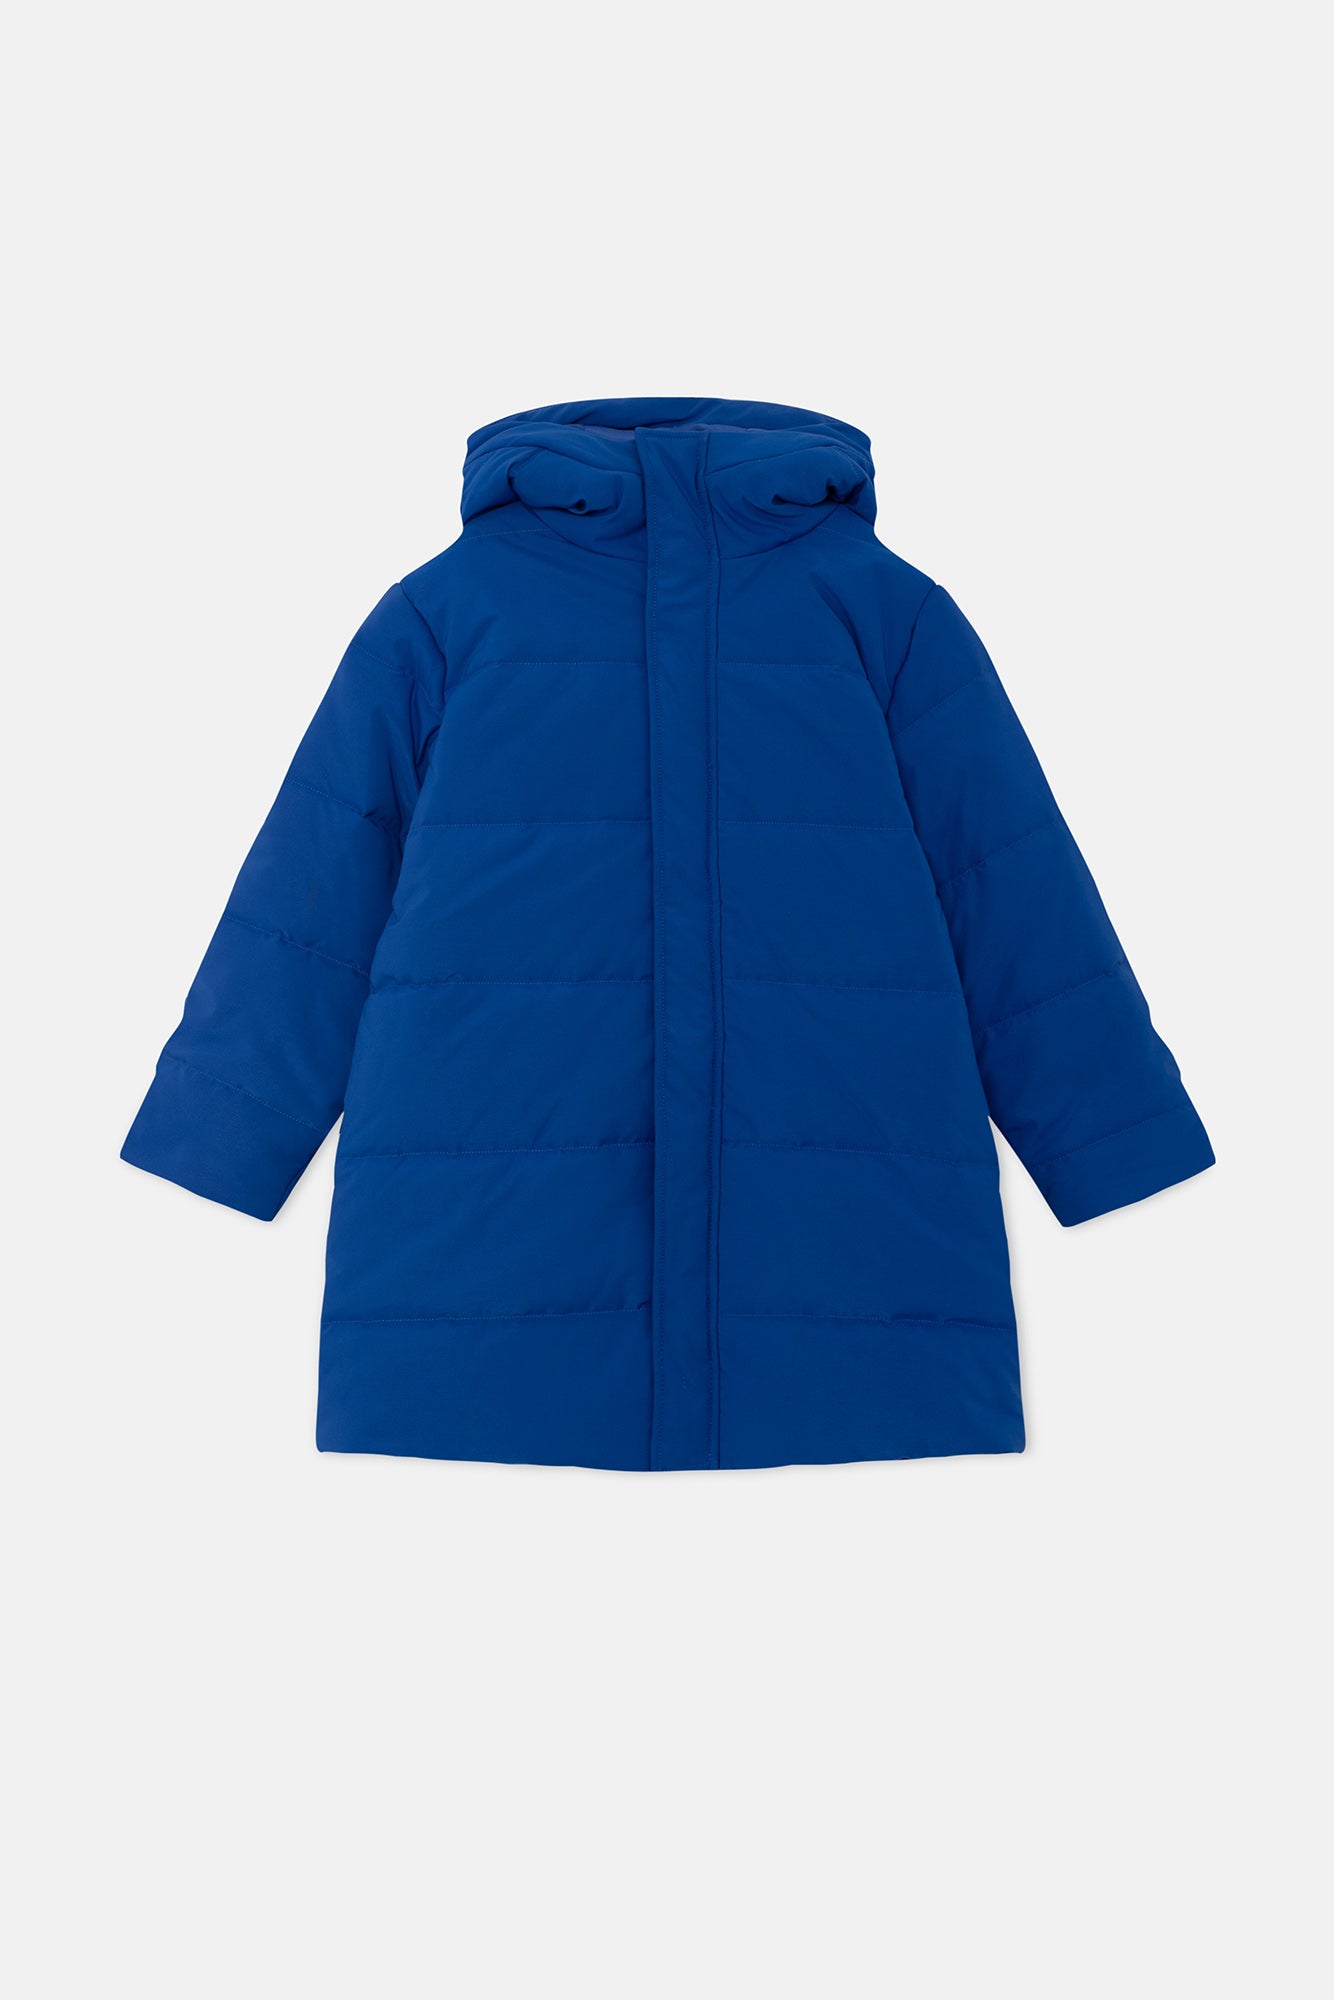 Abrigo unisex plumífero midi con capucha azul